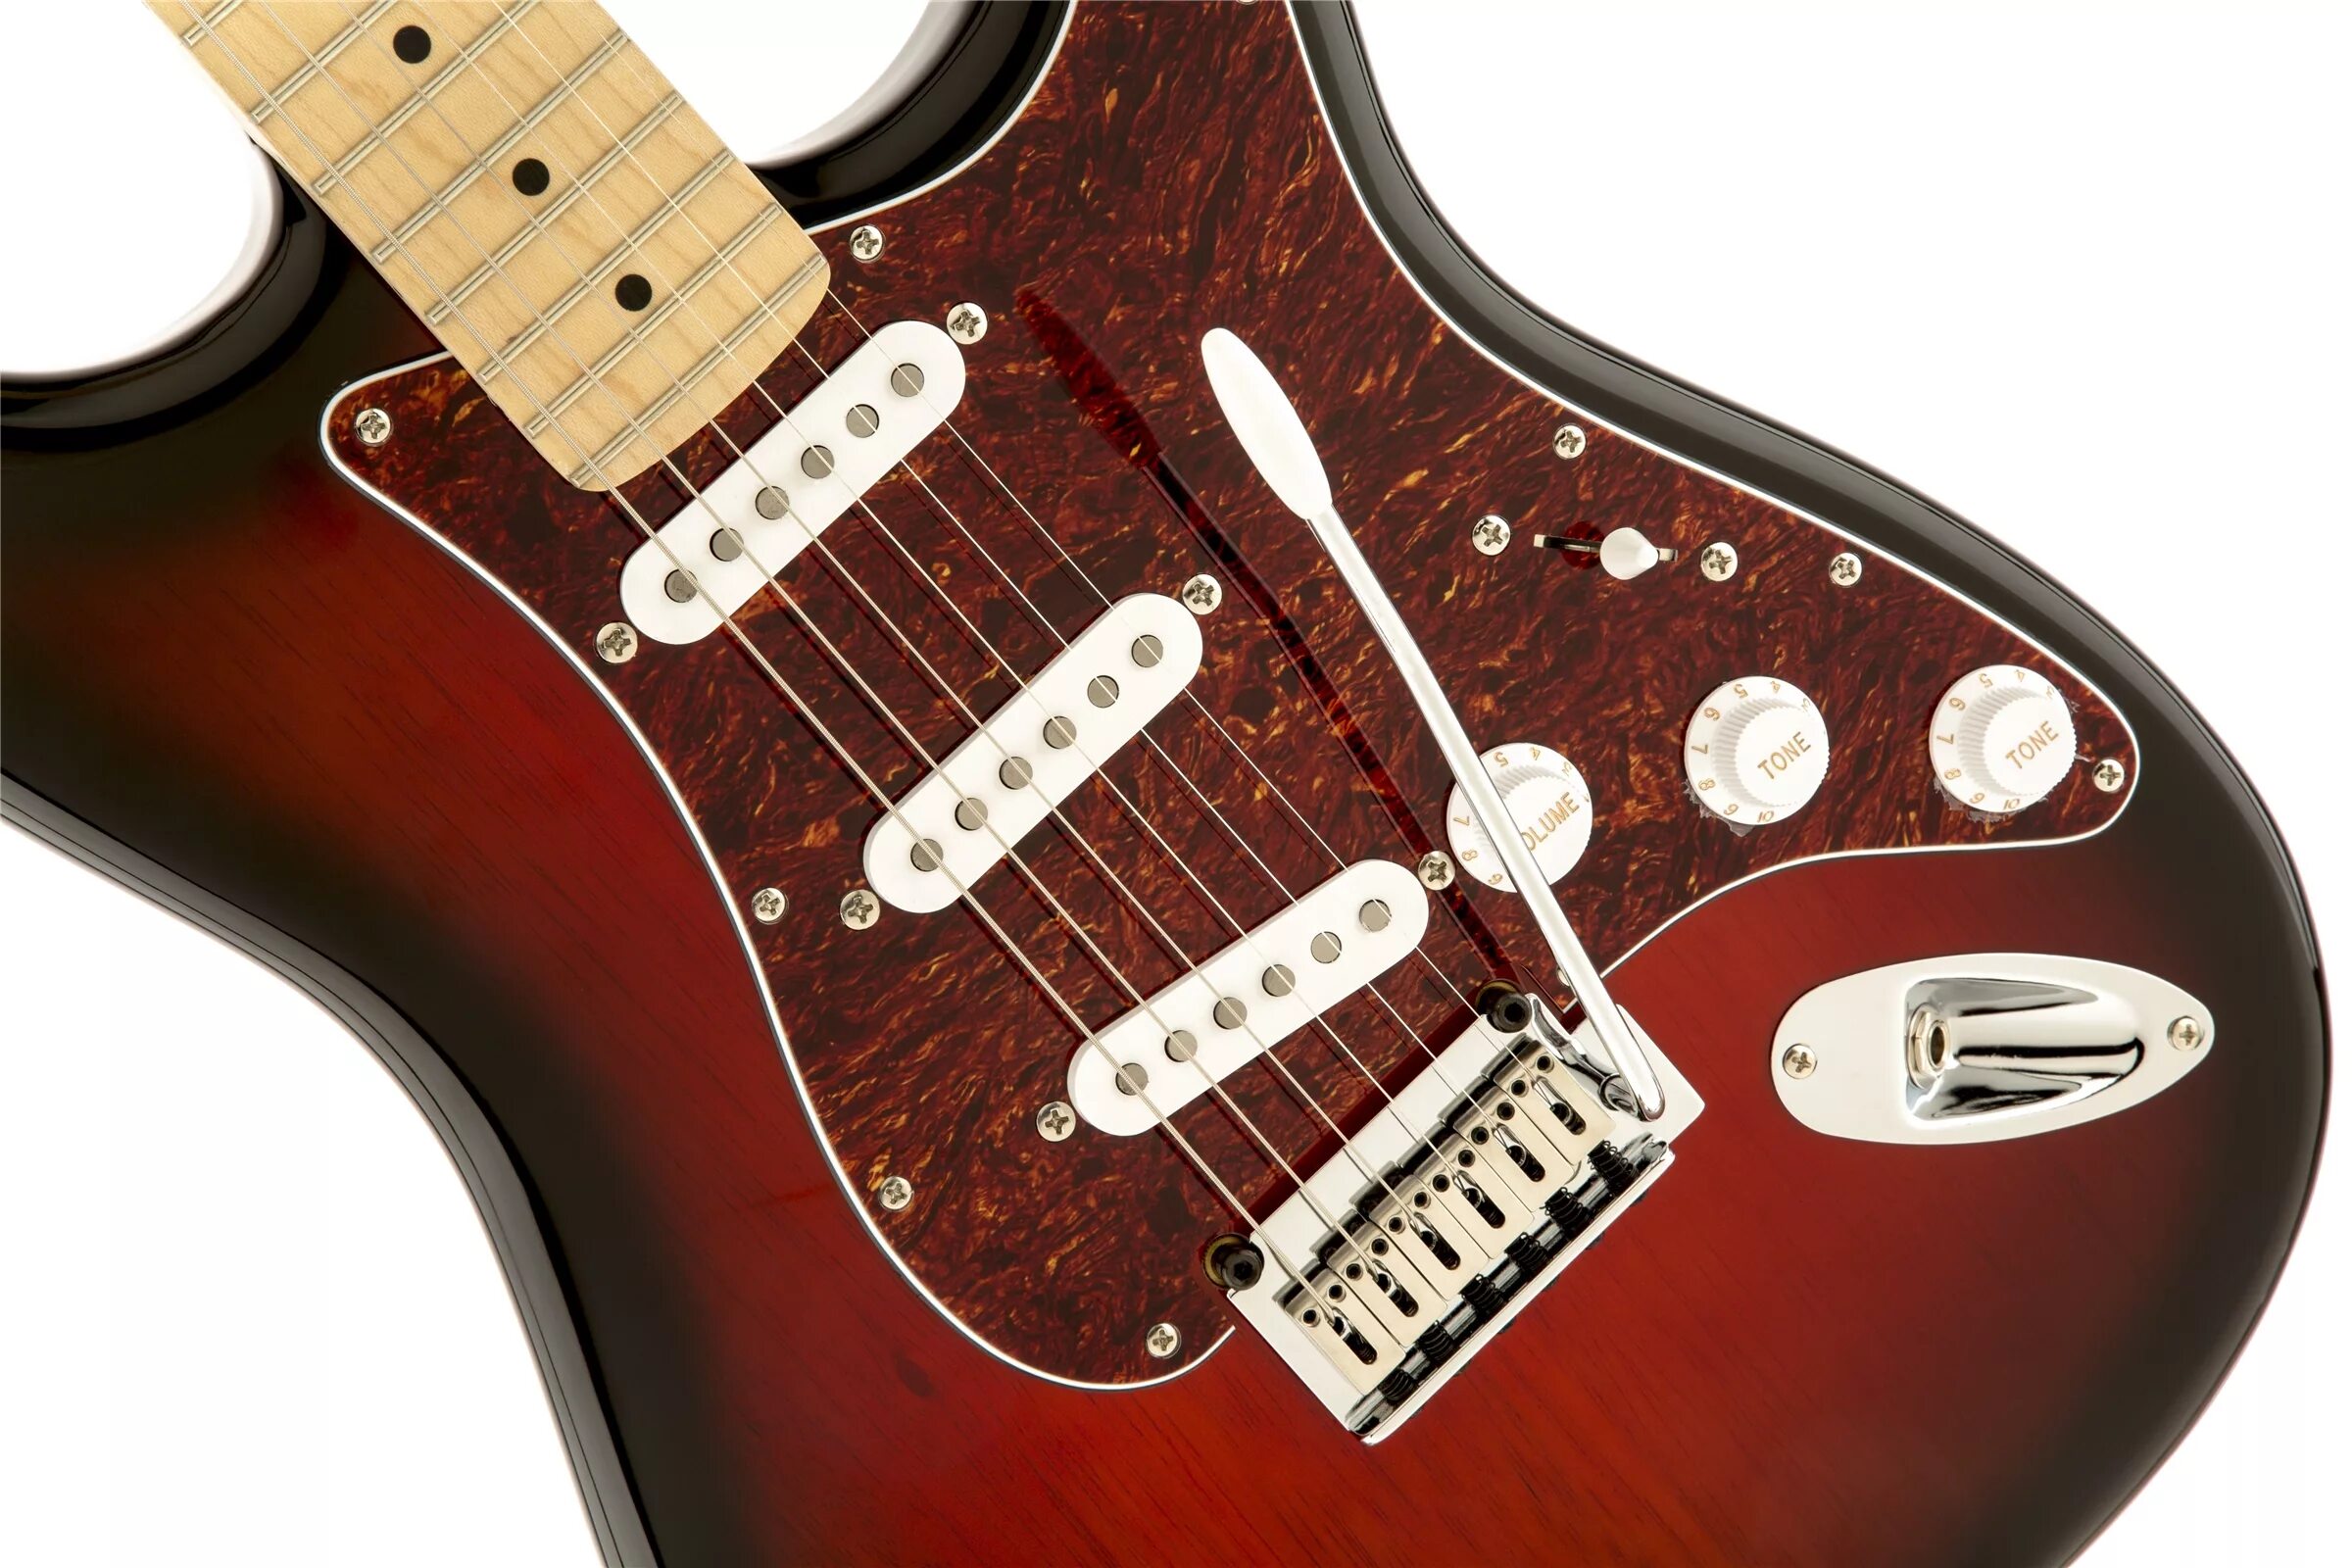 Стратокастер Fender Squier. Гитара Squier Stratocaster. Fender Squier красная стратокастер. Скваер бай Фендер стратокастер.